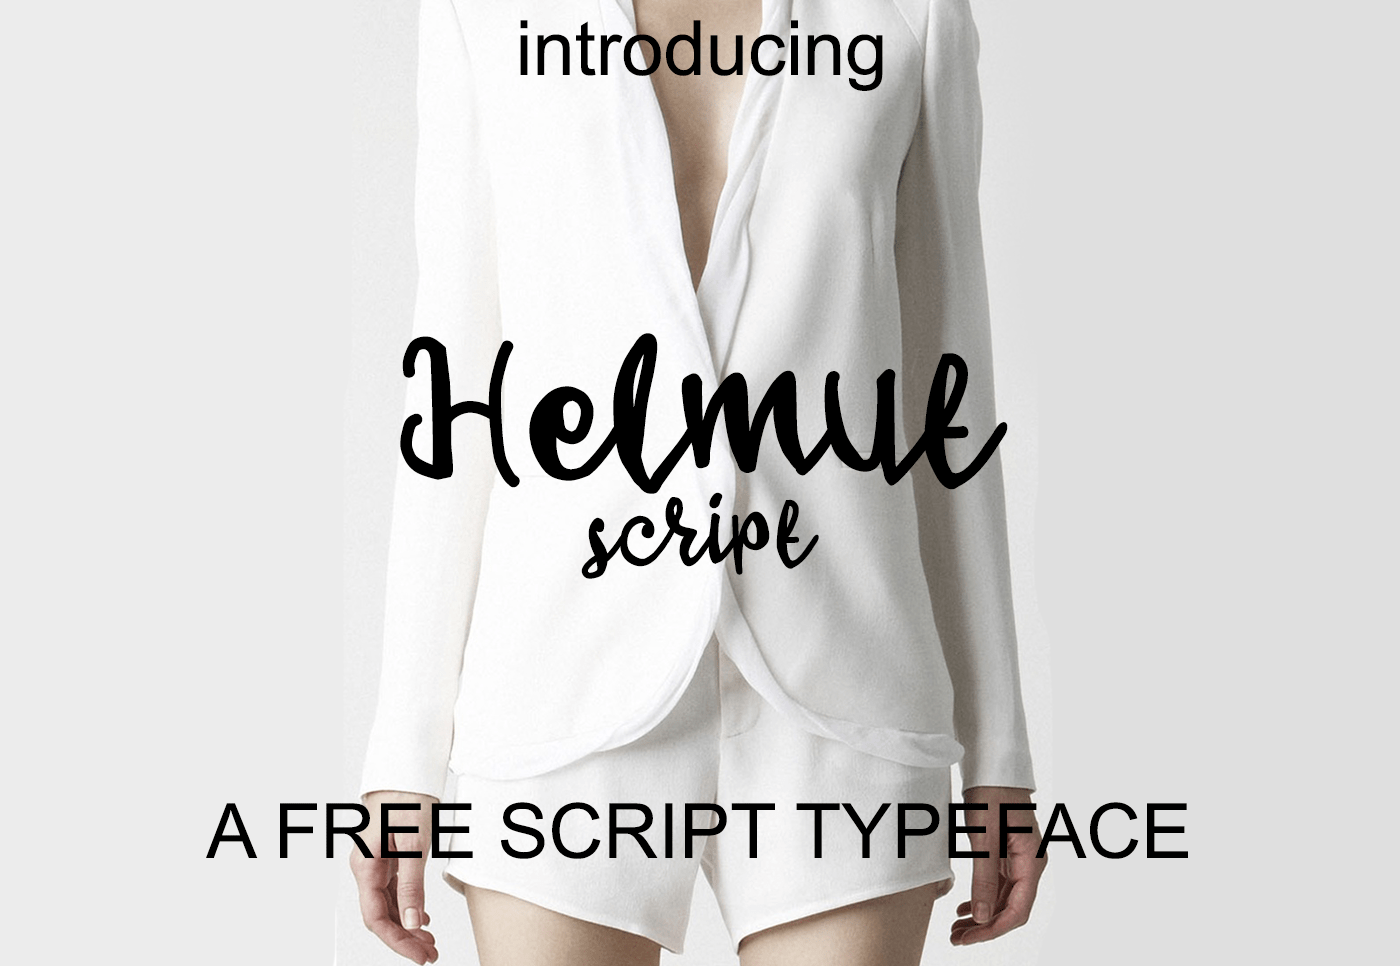 Helmut Script Font Free